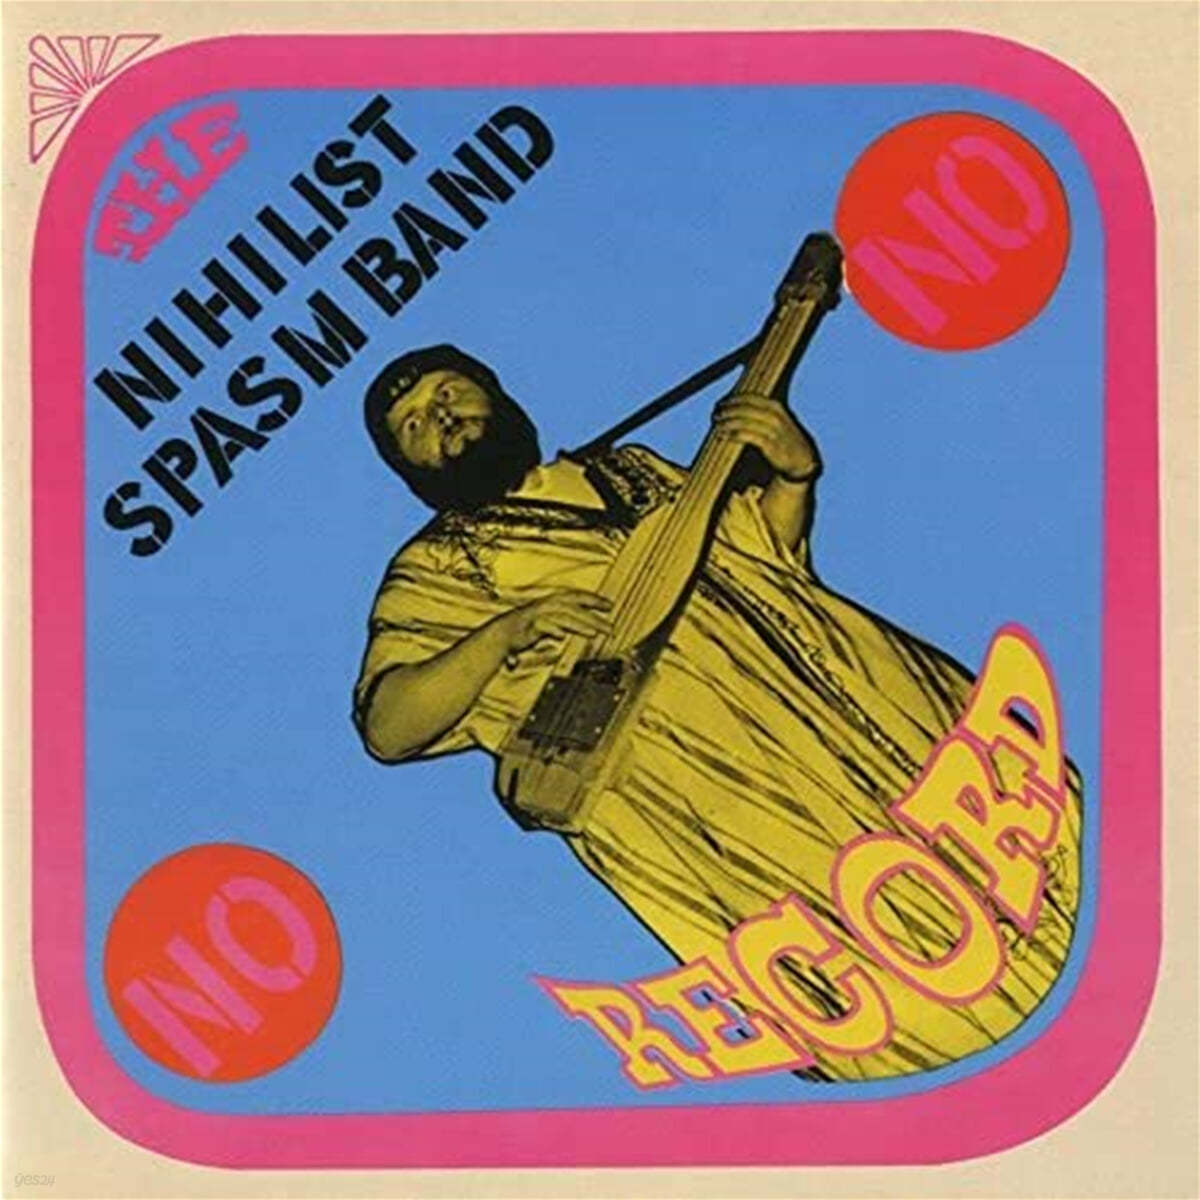 Nihilist Spasm Band (니힐리스트 스파즘 밴드) - No Record [LP] 